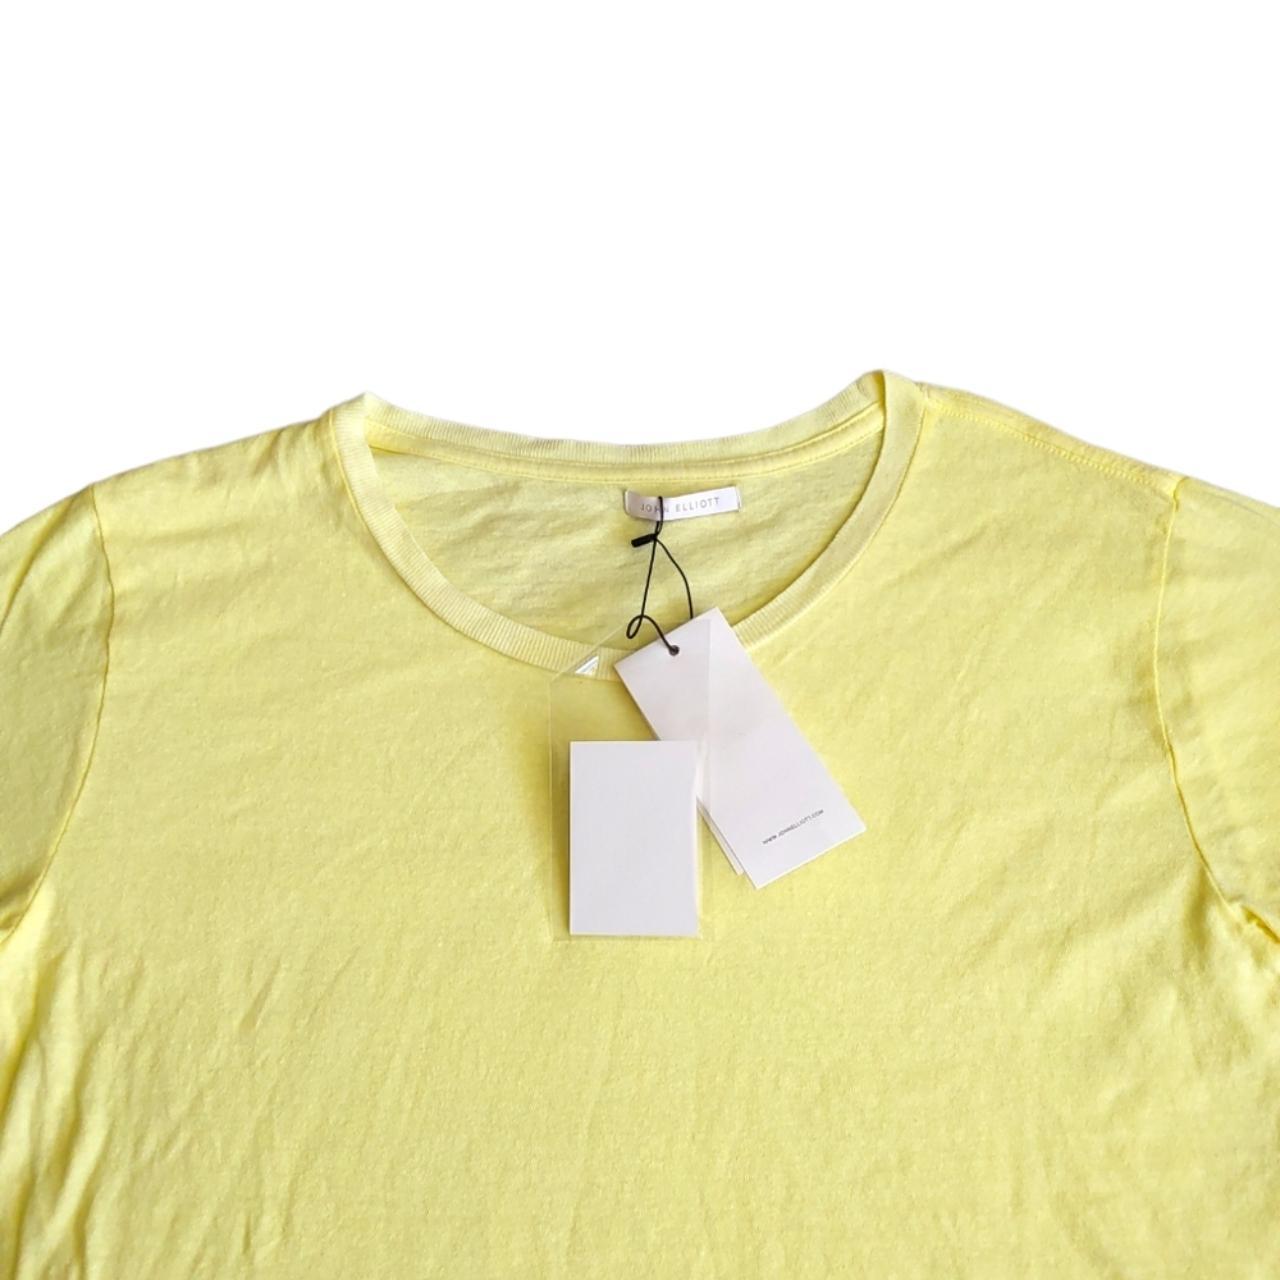 John Elliott Women's Yellow T-shirt (4)